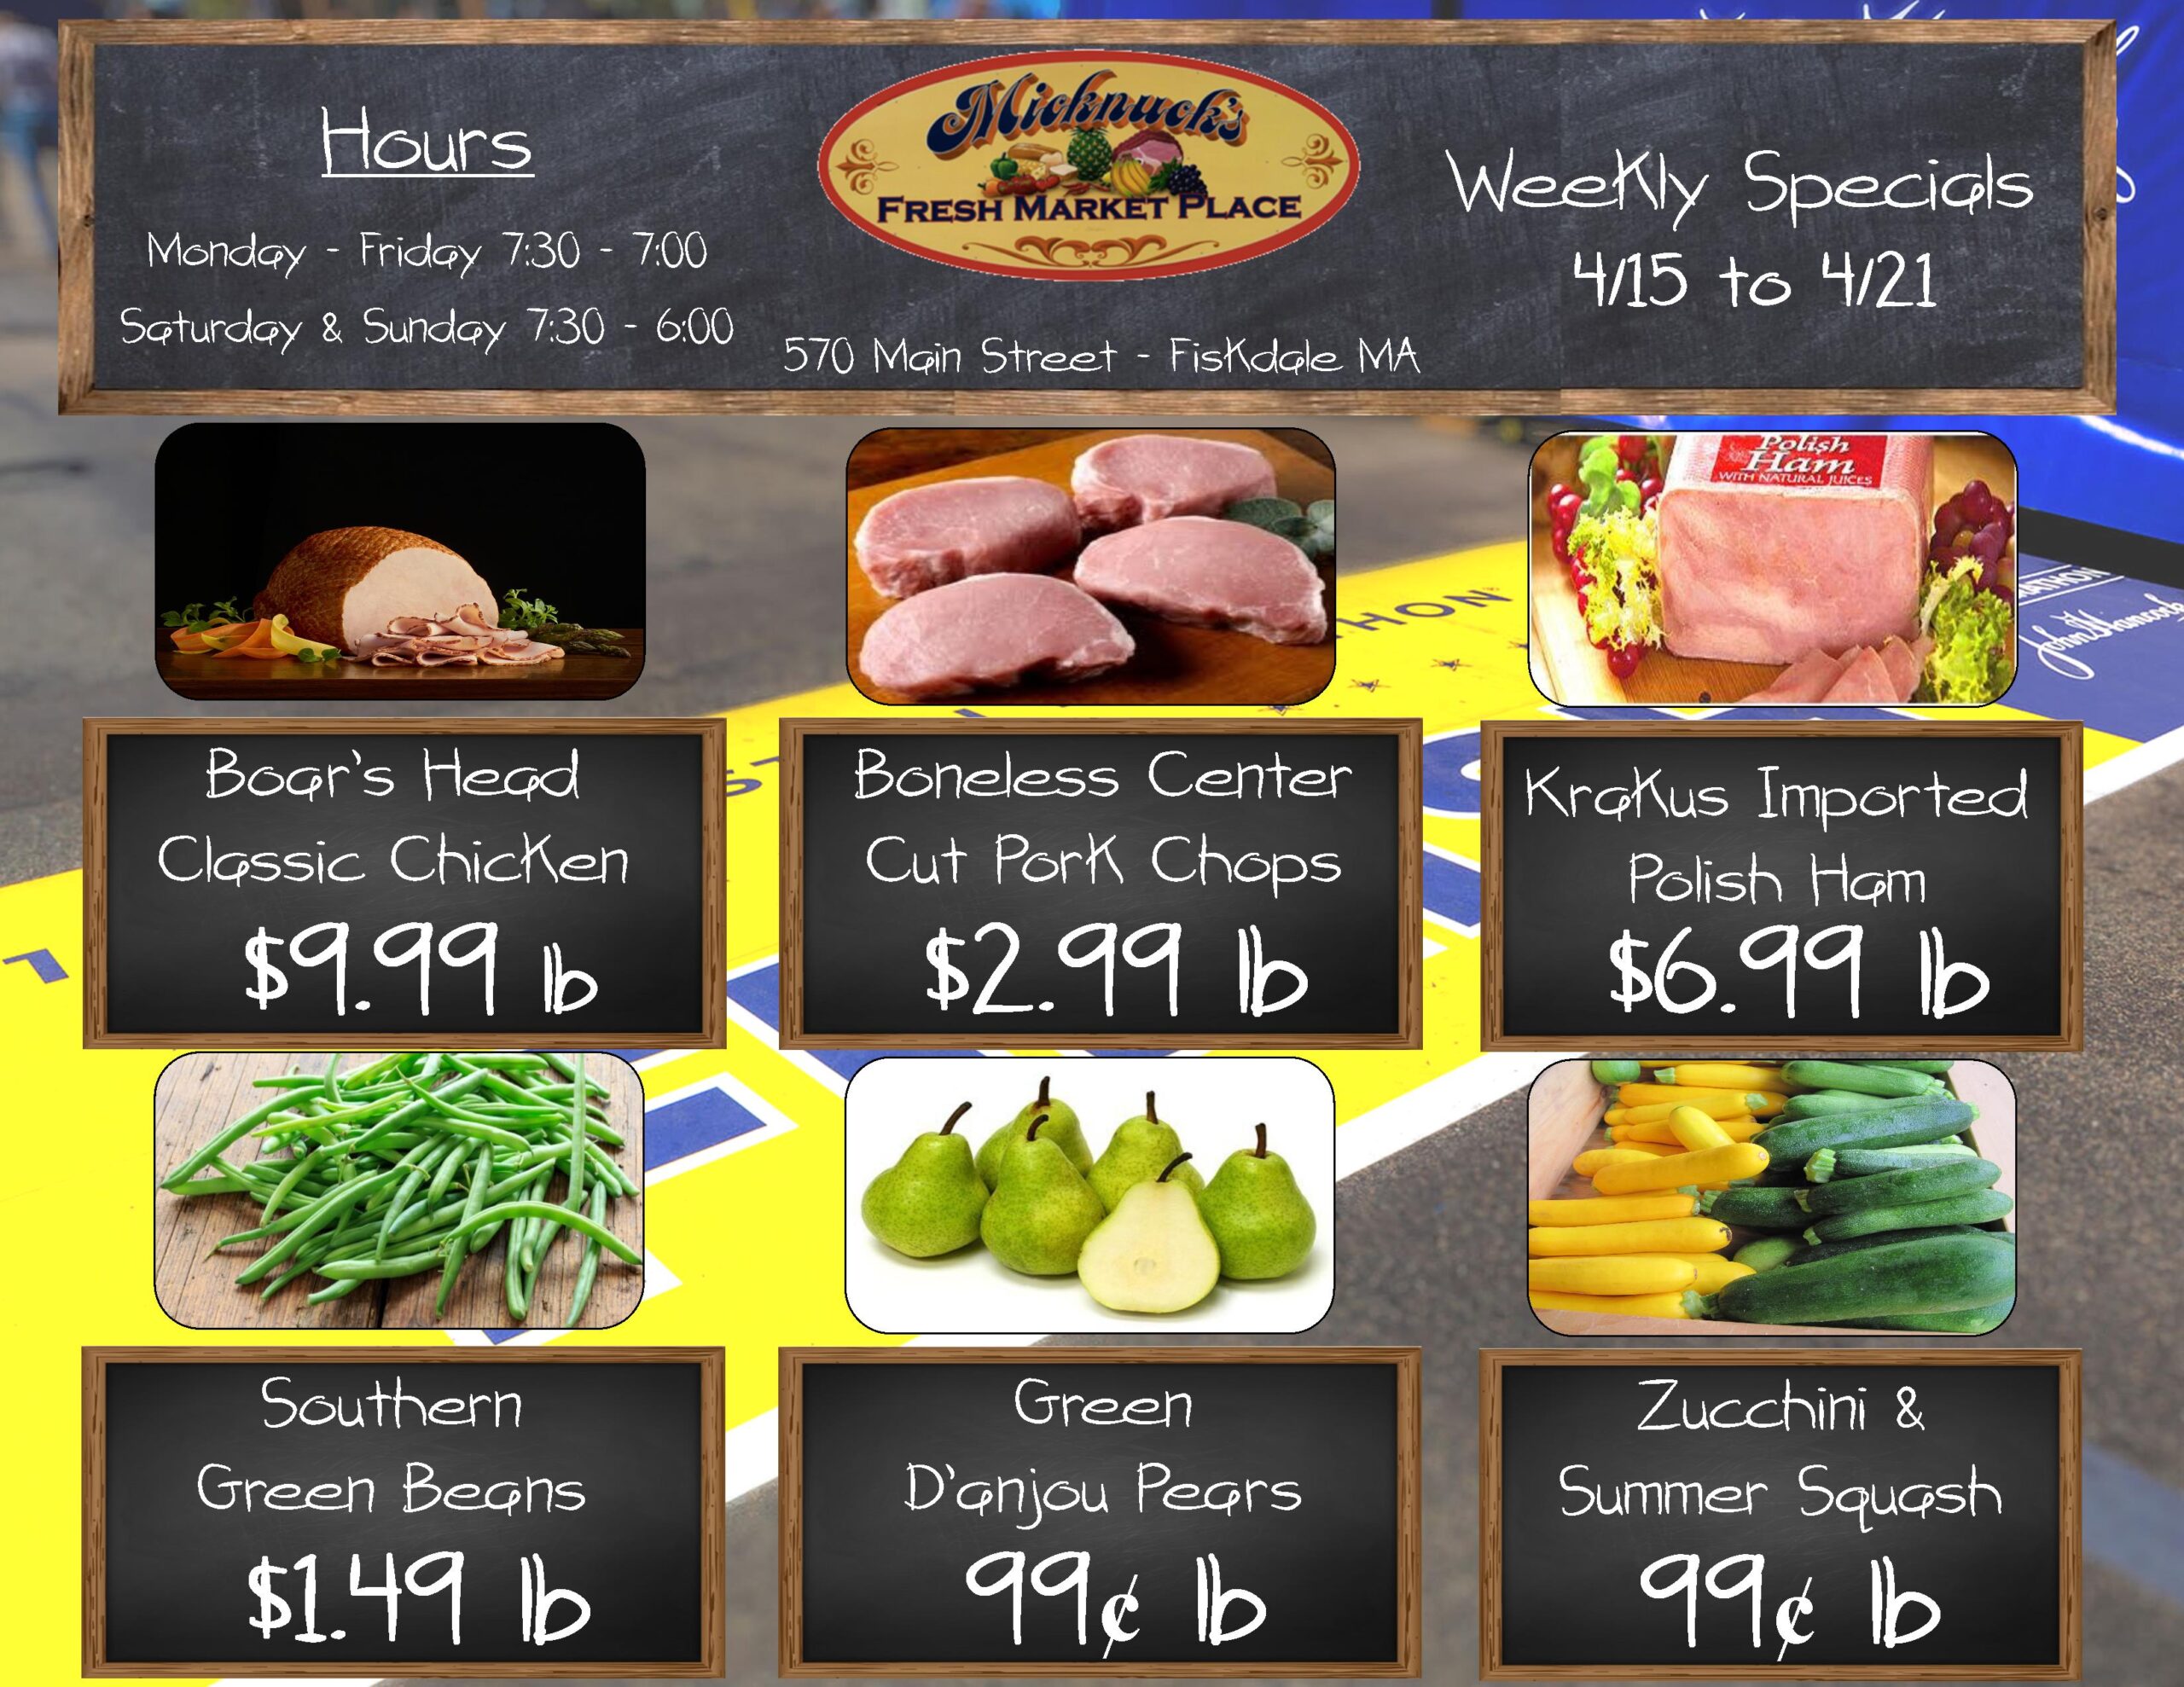 Weekly Specials 4/15-4/21. Boar's Head classic chicken $9.99/lb. Boneless Center cut pork chops $2.99/lb. Krakus Imported Polish Ham $6.99/lb. Souther Green Beans 1.49/lb. Green D'anjou Pears $.99/lb. Zucchini & Squash $.99/lb.